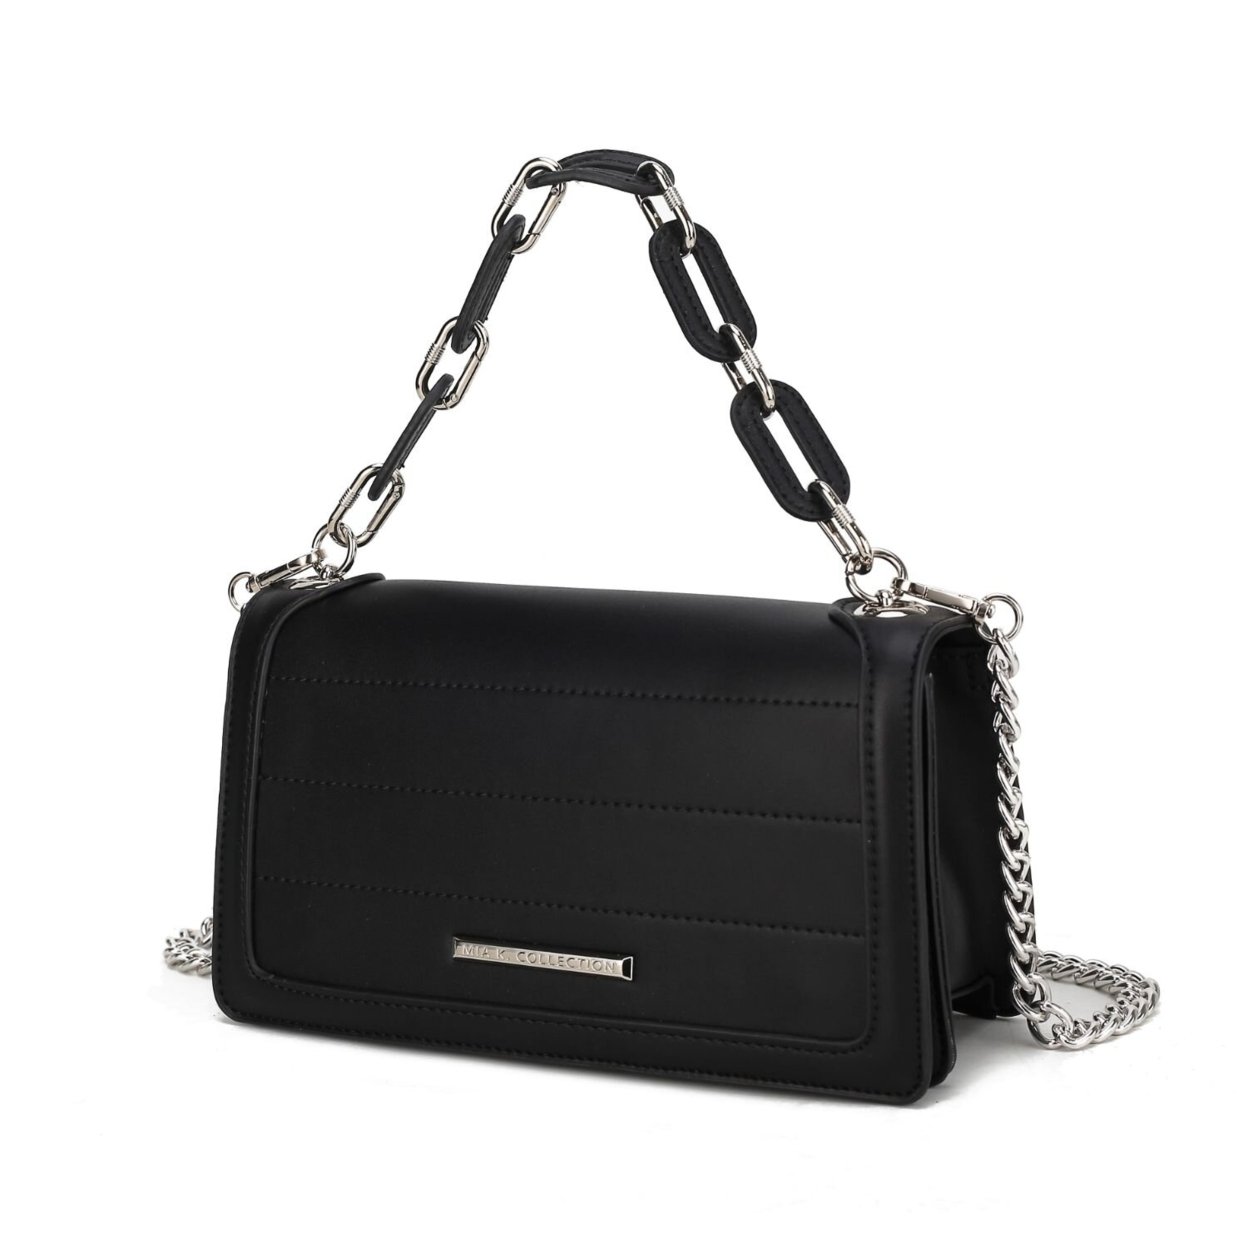 MKF Collection Dora Crossbody Handbag By Mia K - Navy